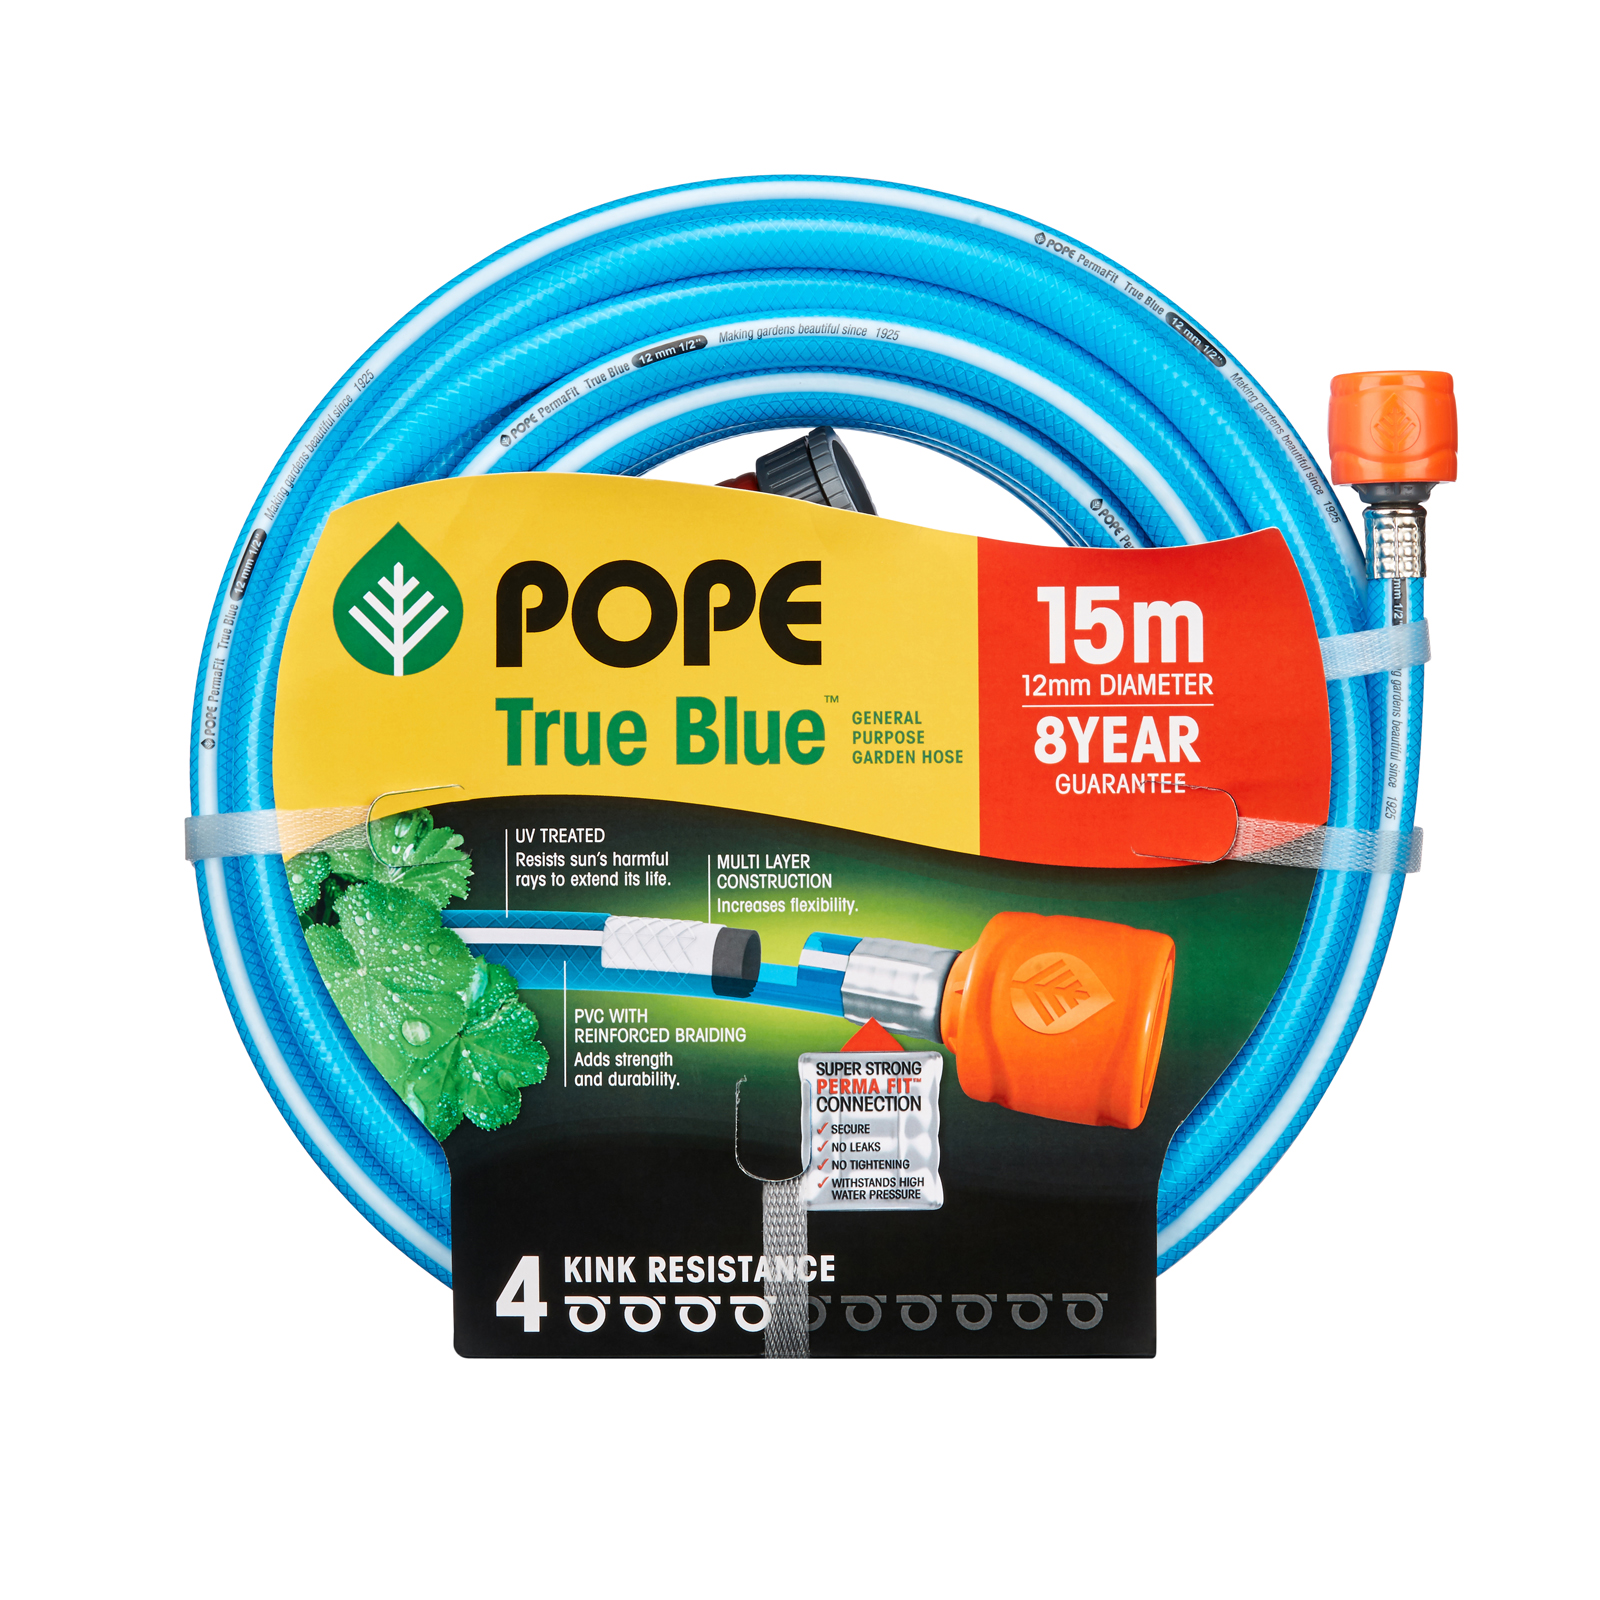 Pope 12mm x 15m True Blue Garden Hose